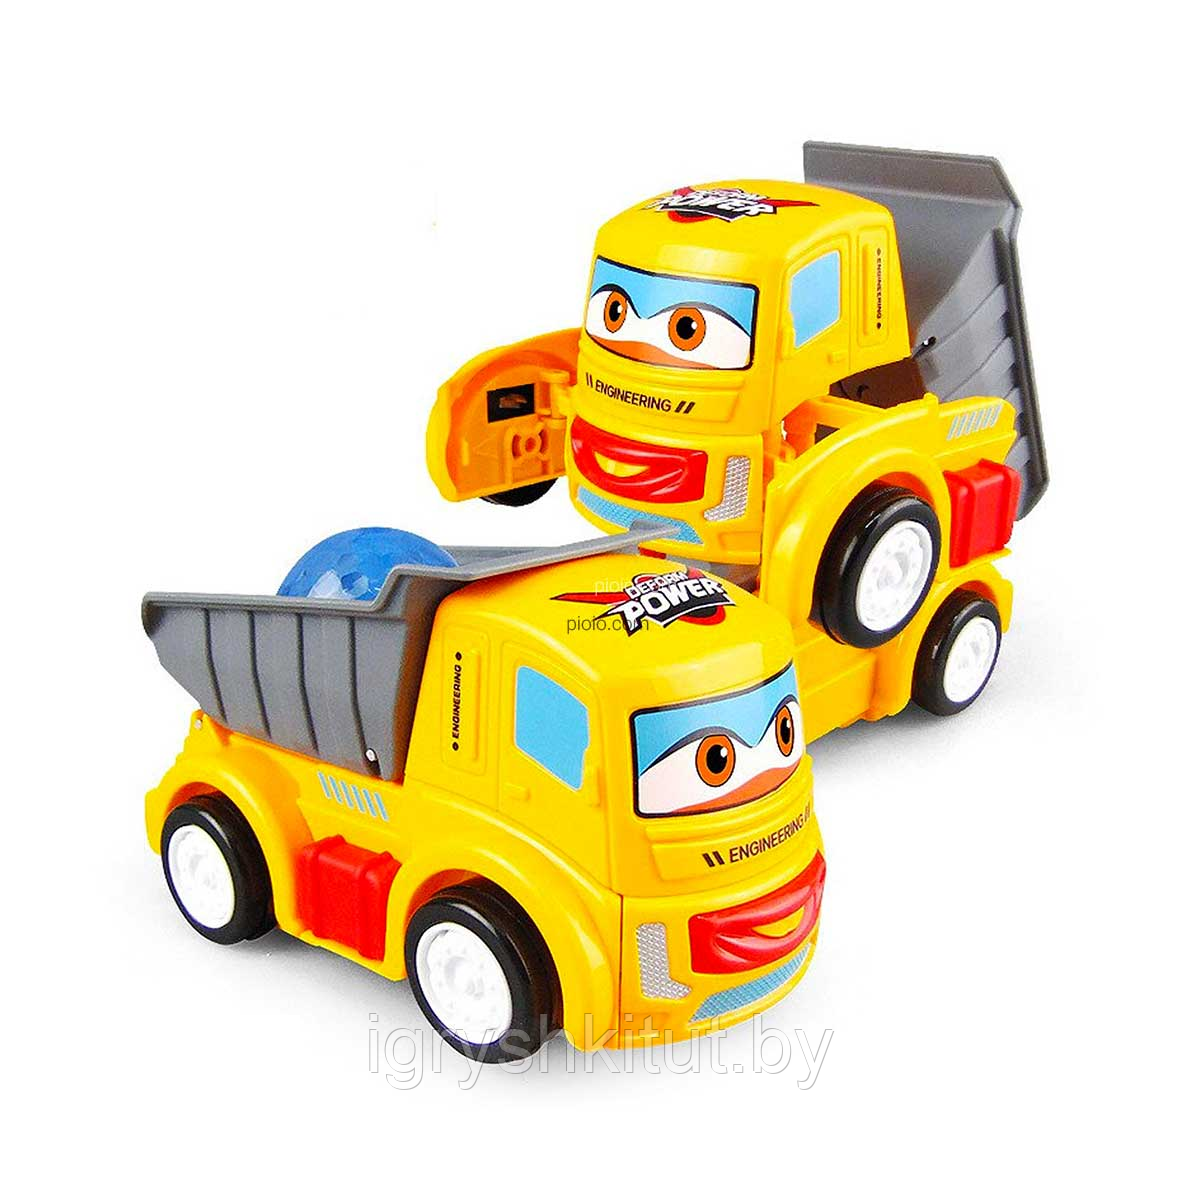 Игрушка Жёлтый грузовик-трансформер, свет, звук